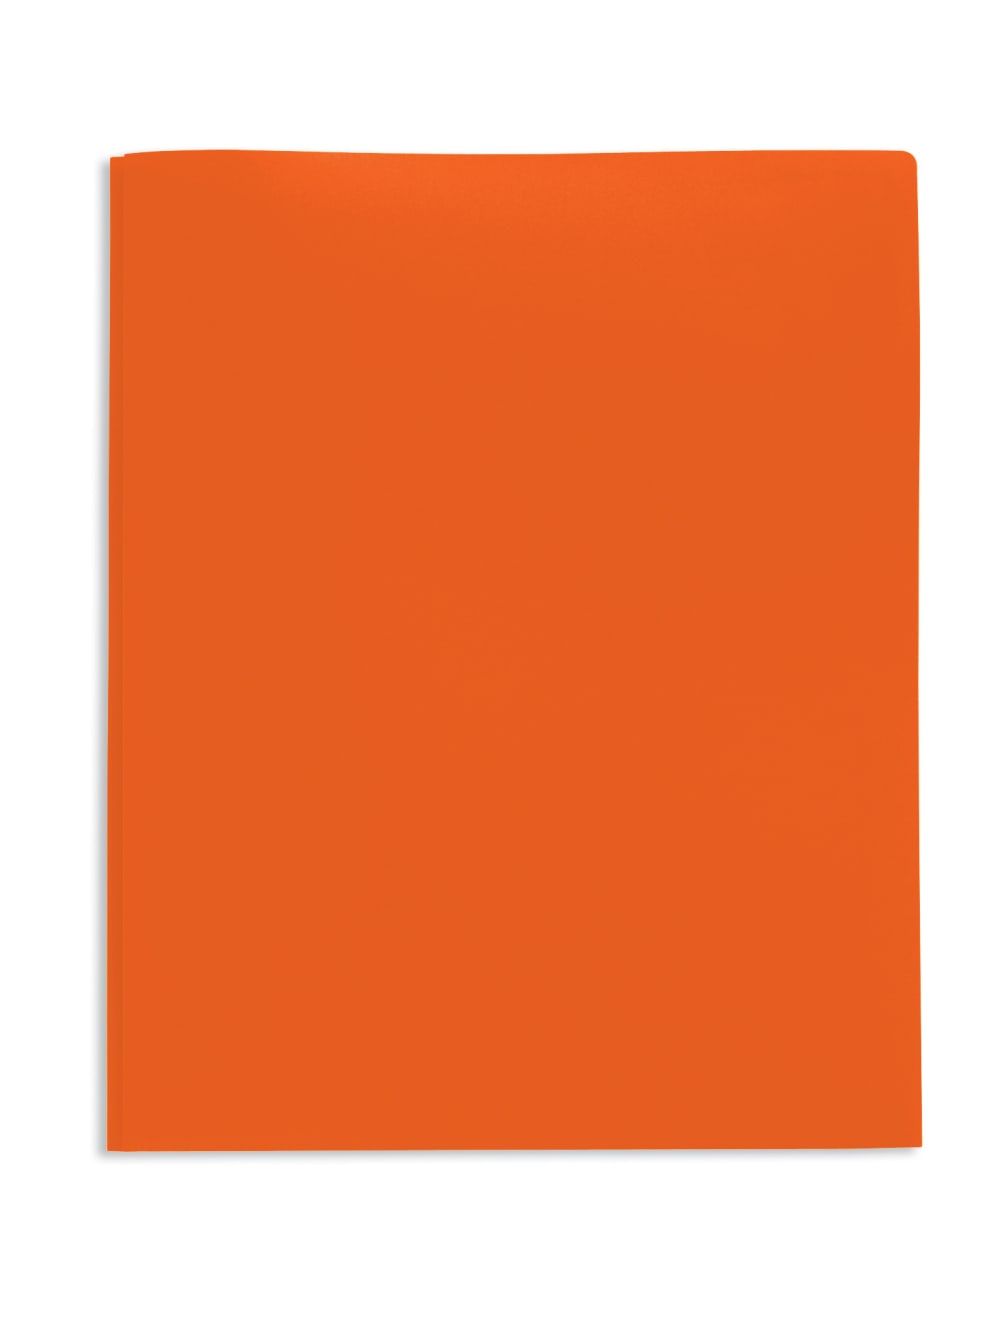 Office Depot® Brand 2-Pocket Poly Folder with Prongs, Letter Size, Orange
				
		        		












	
			
				
				 
					Item # 
					
						
							
							
								491309